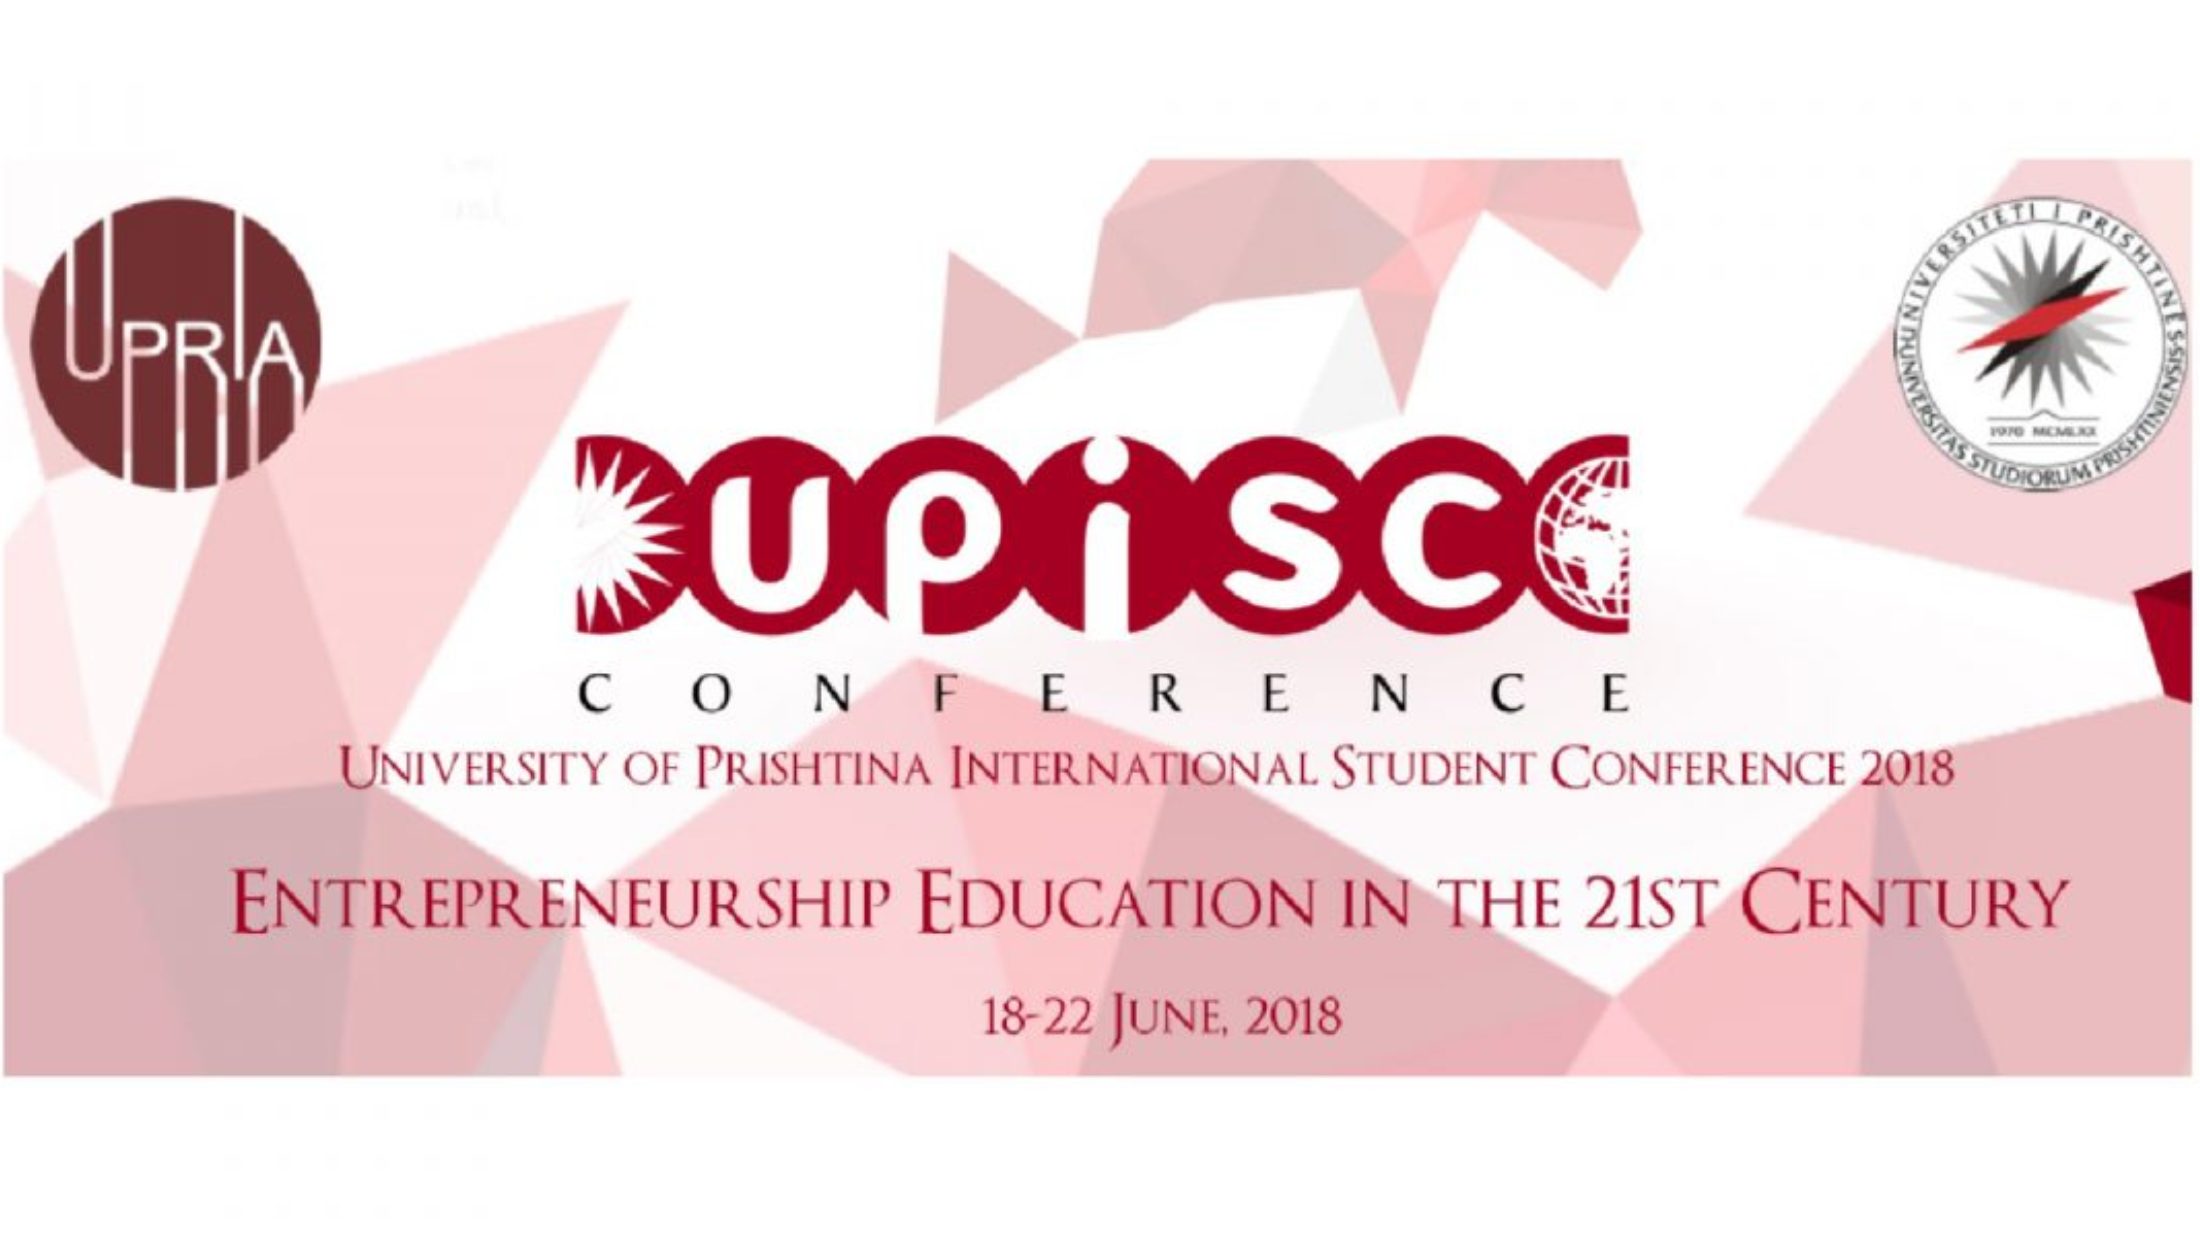 The International Student Conference of the University of Prishtina